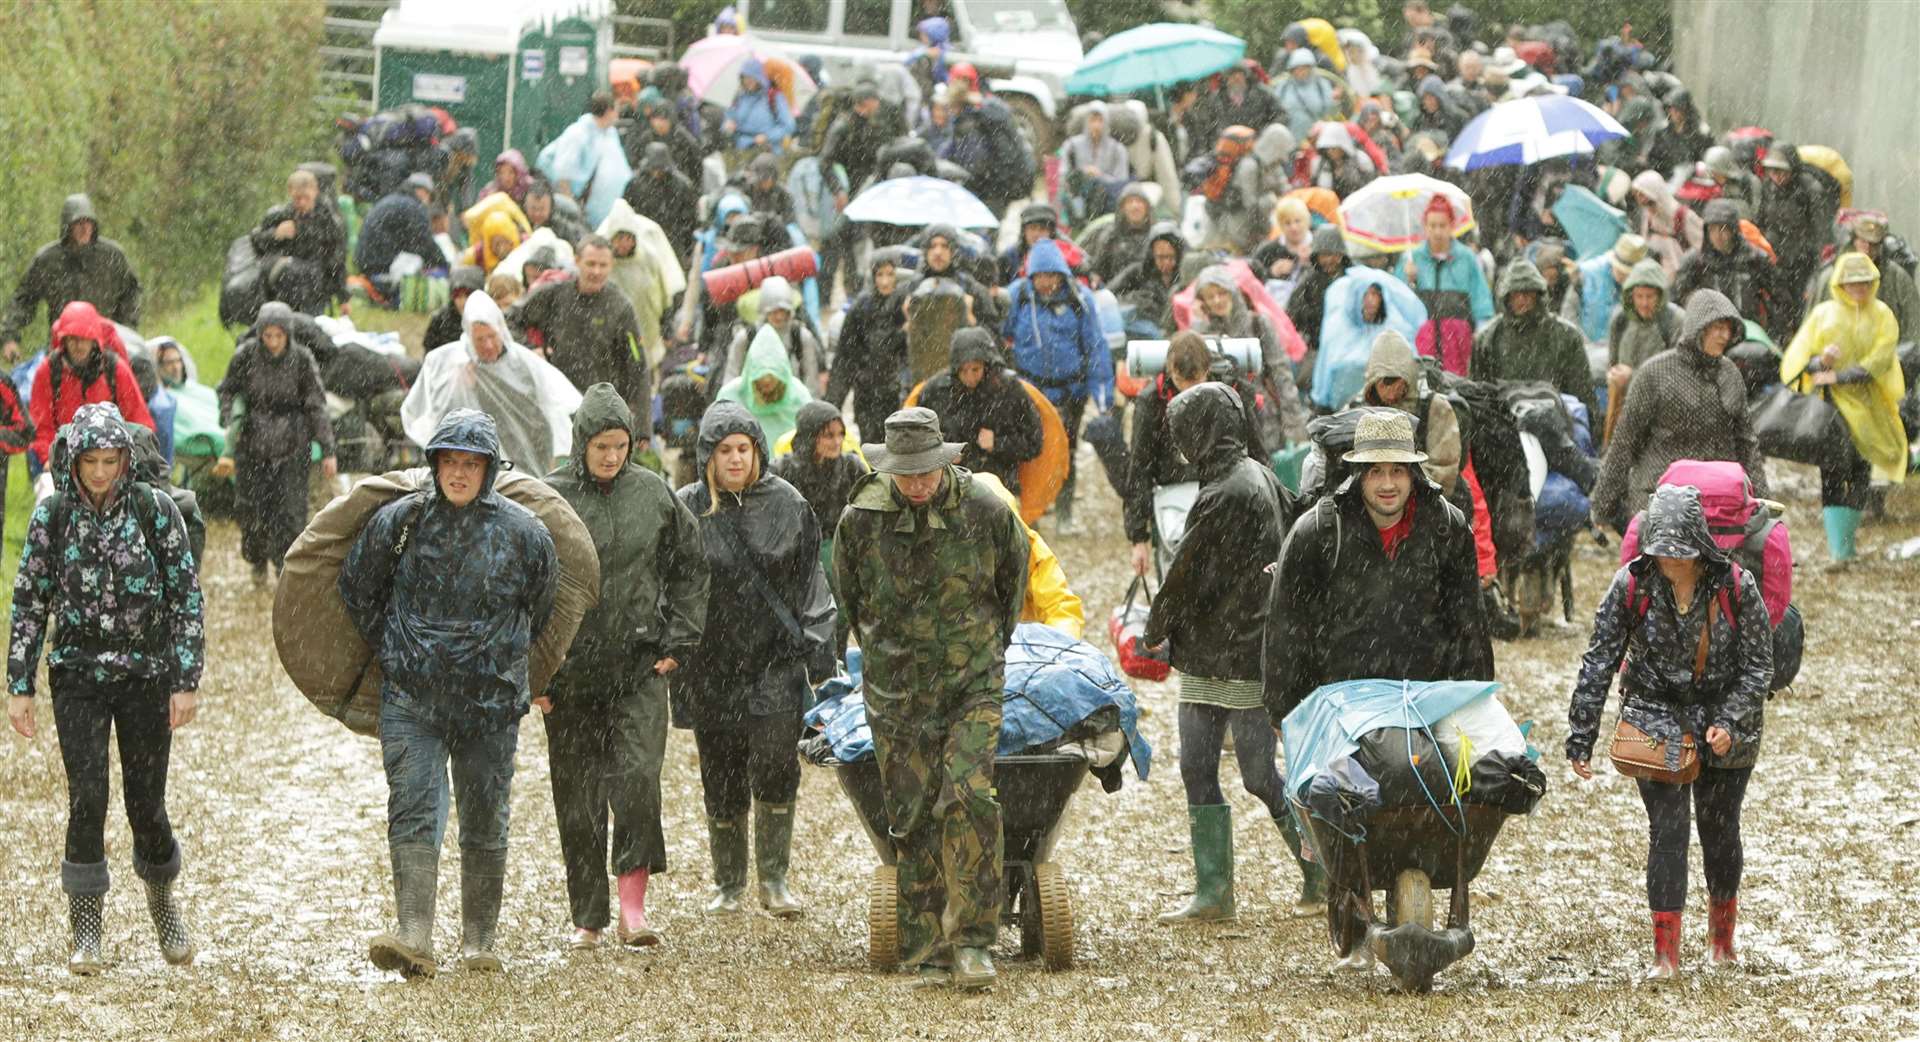 Festival goers arriving at the Glastonbury Festival in 2011 (Yui Mok/PA)